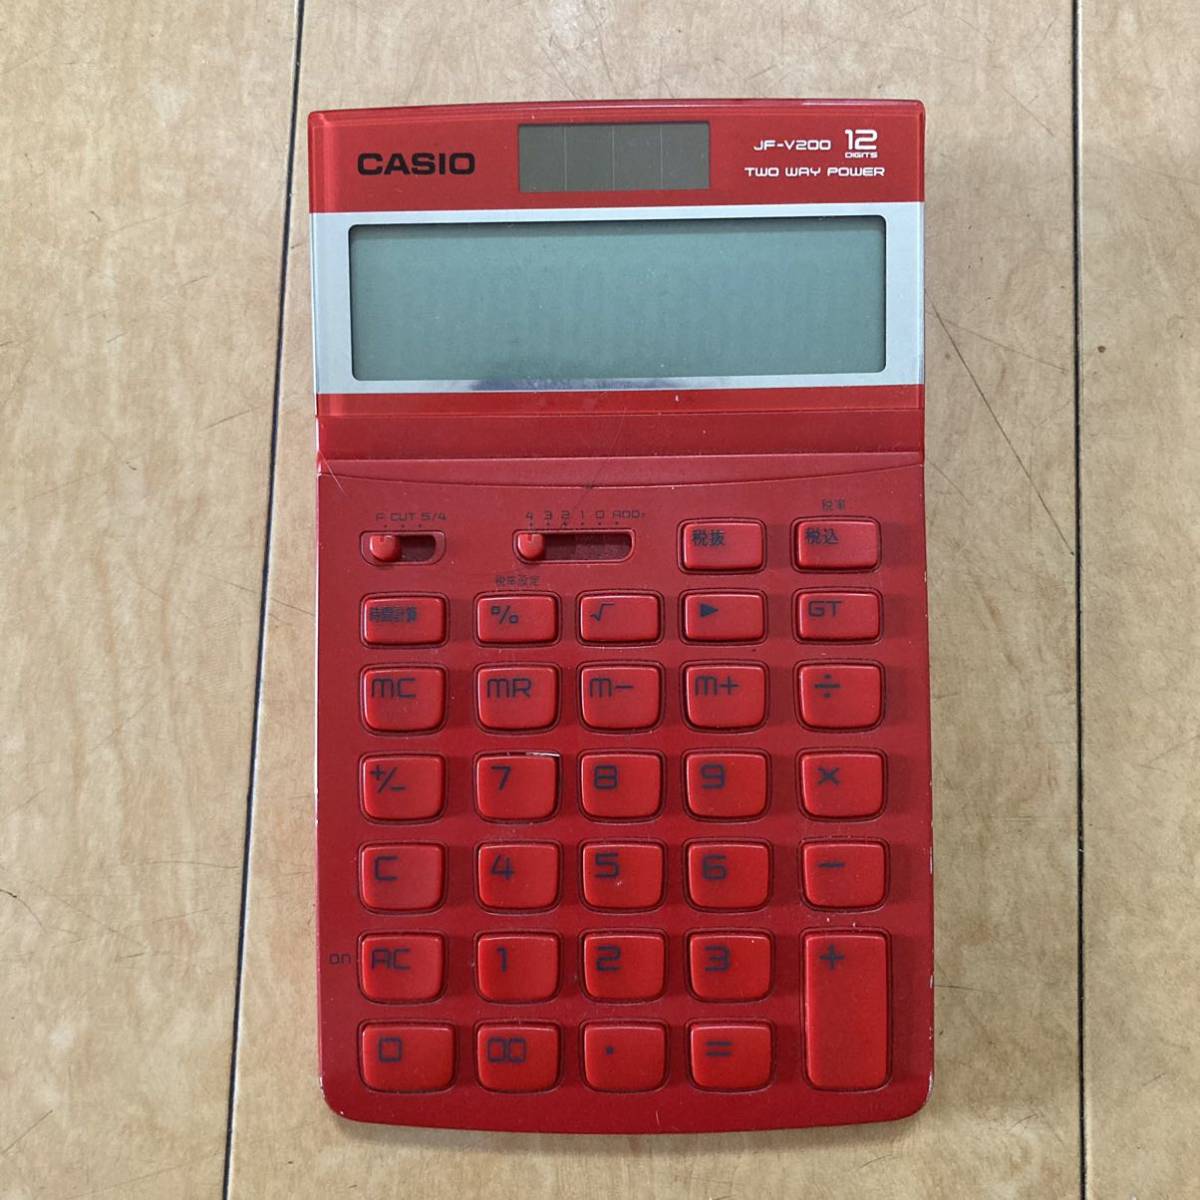 CASIO 電卓 カシオ JF-V200 赤 ジャストタイプ 12桁 バーニングレッド_画像2